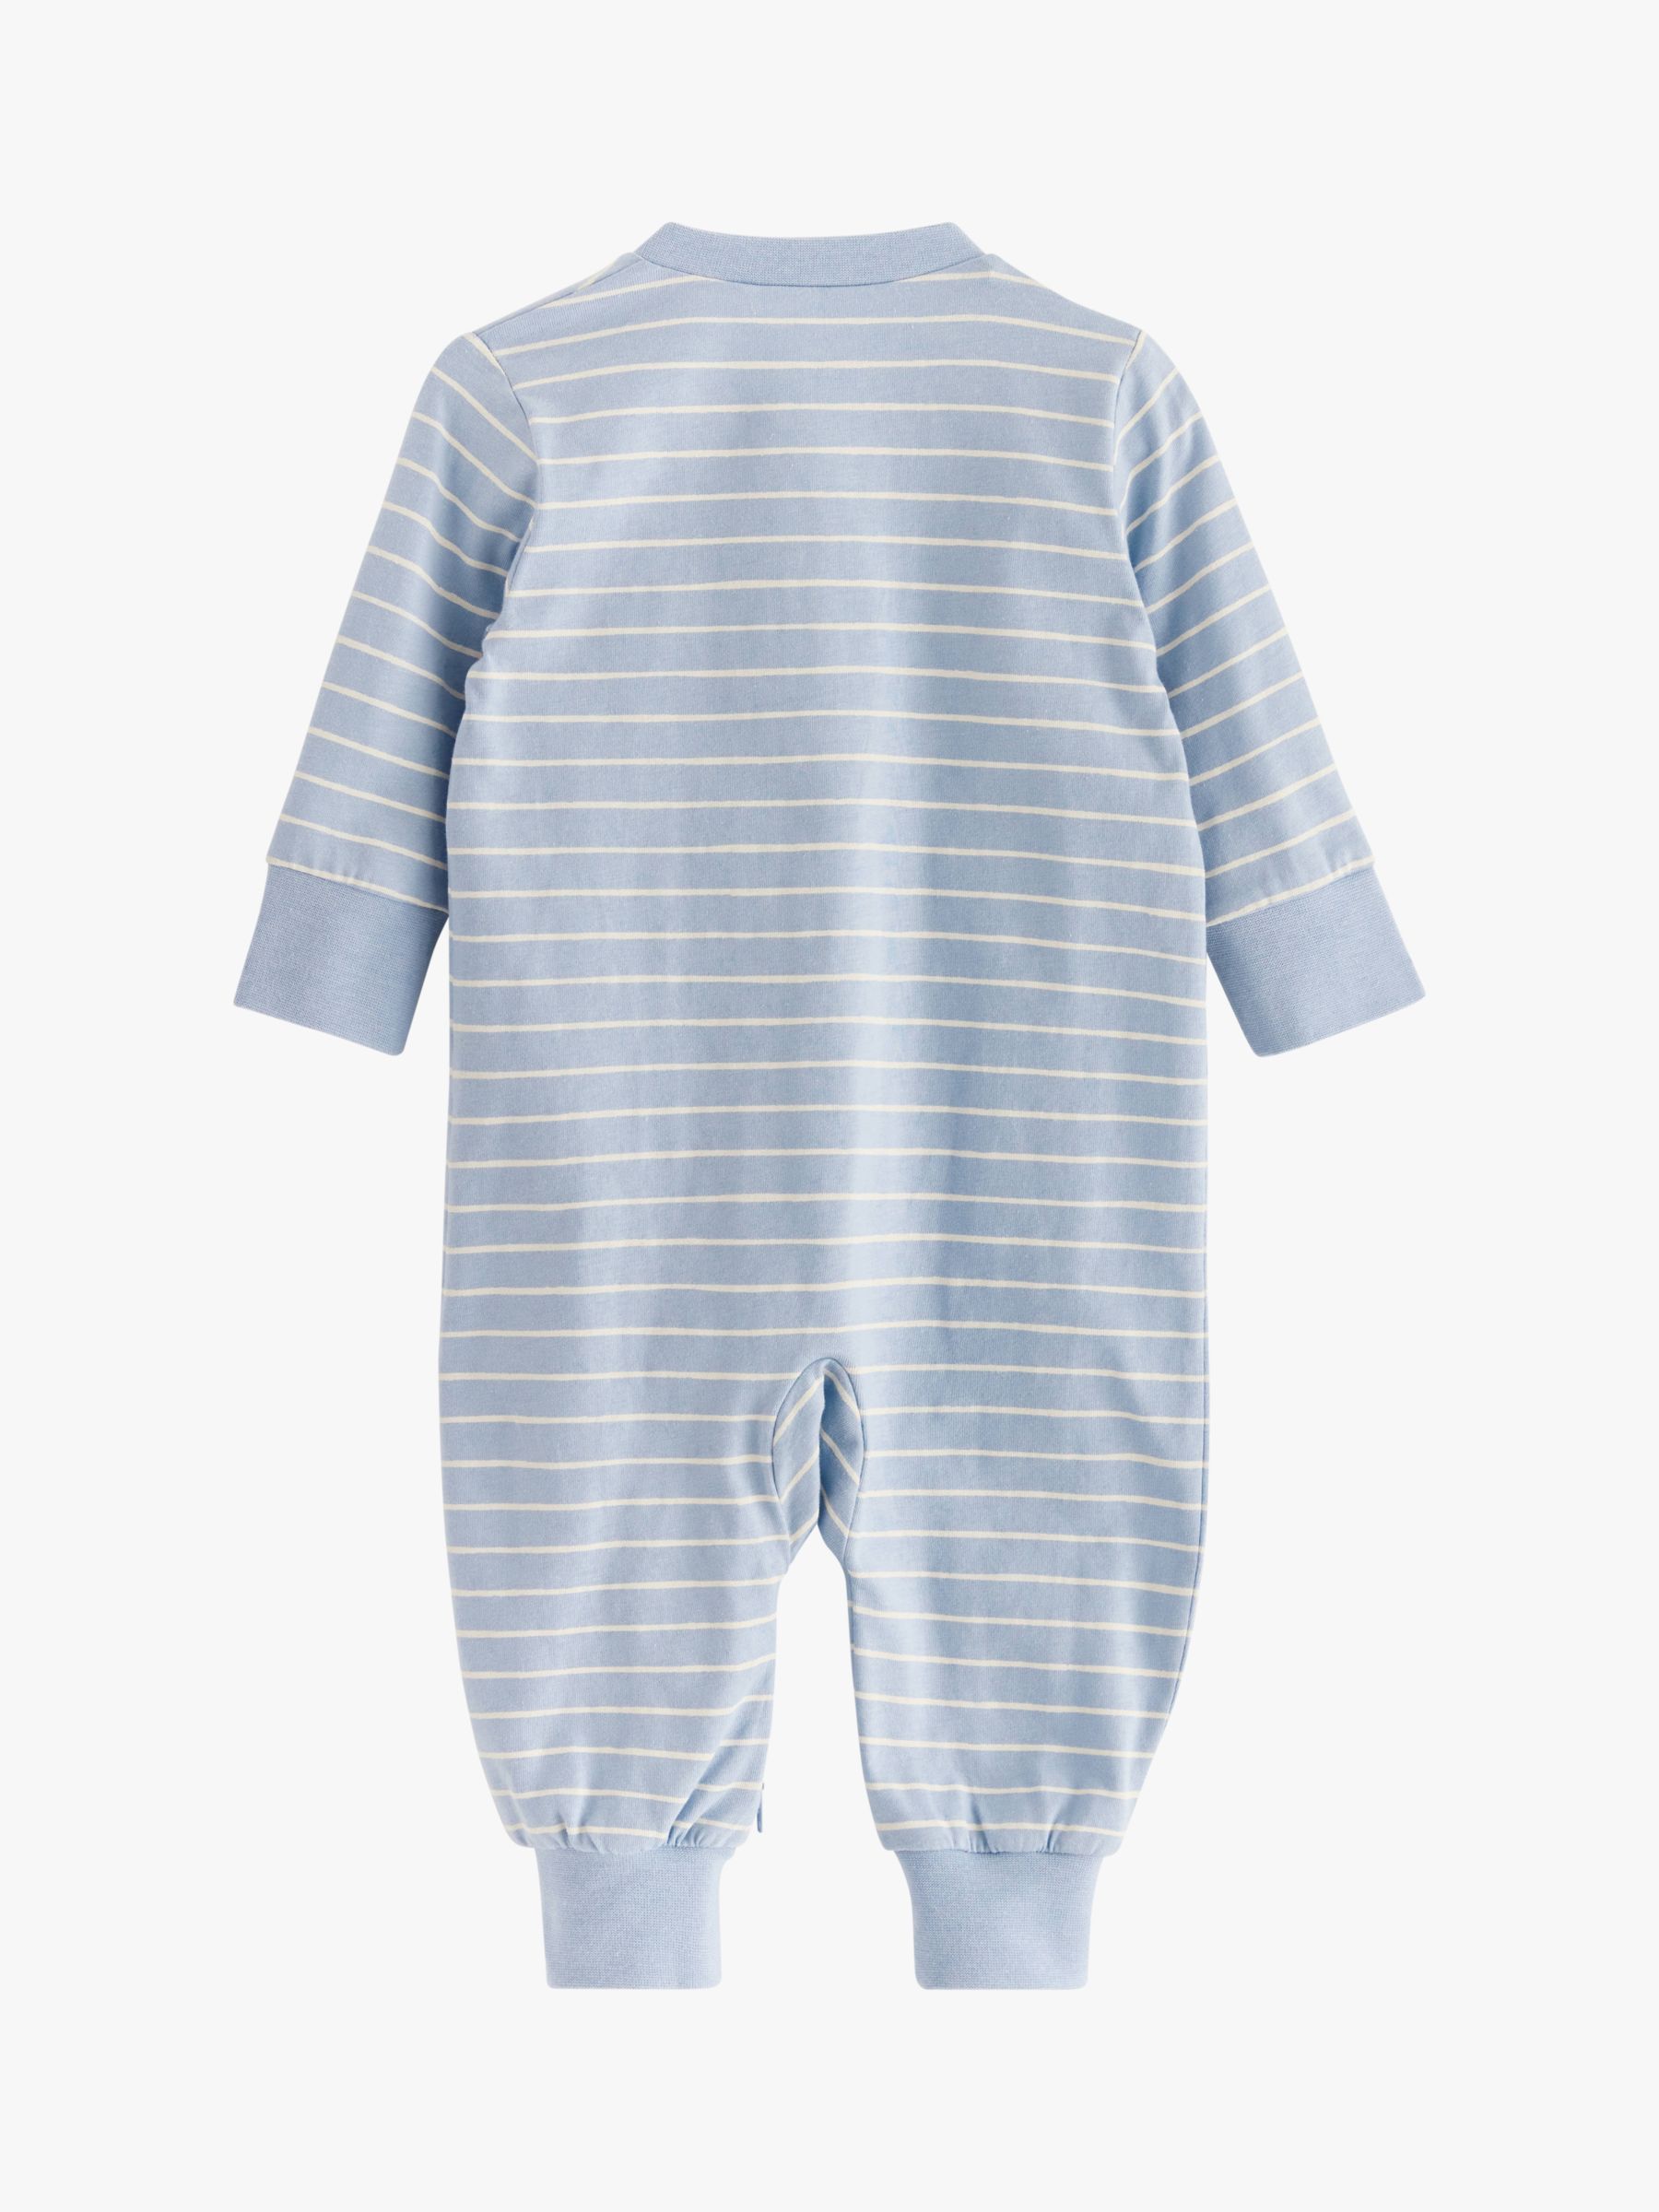 Buy Lindex Baby Organic Cotton Striped Sleepsuit, Light Blue Online at johnlewis.com